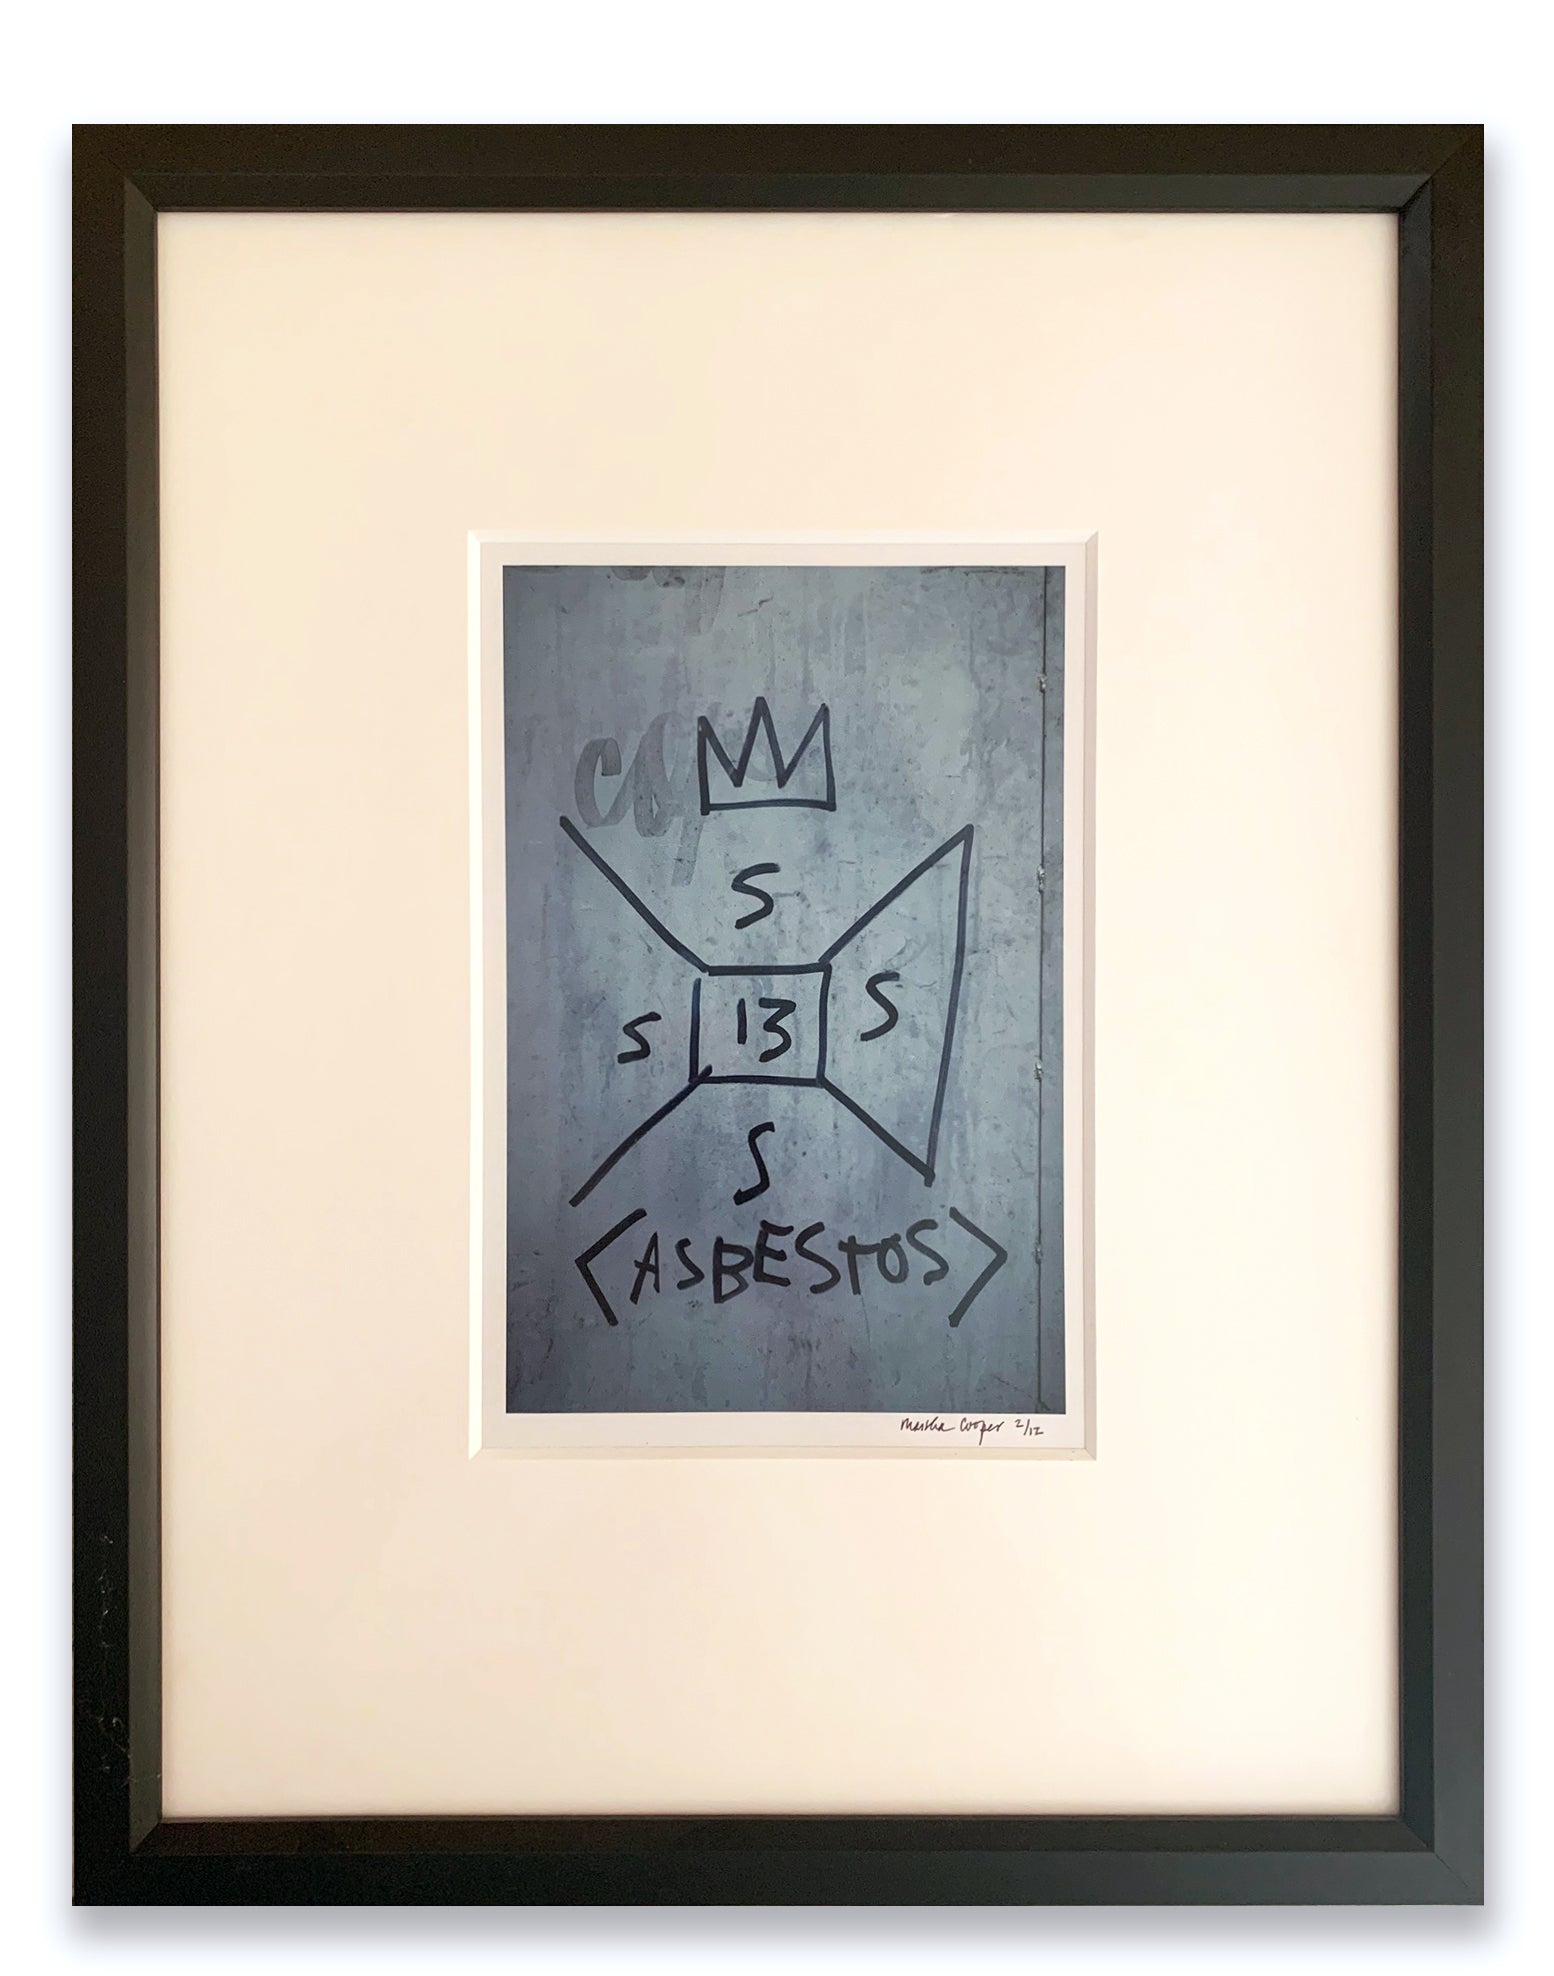 Martha Cooper- "Basquiat - Asbestos" Photo